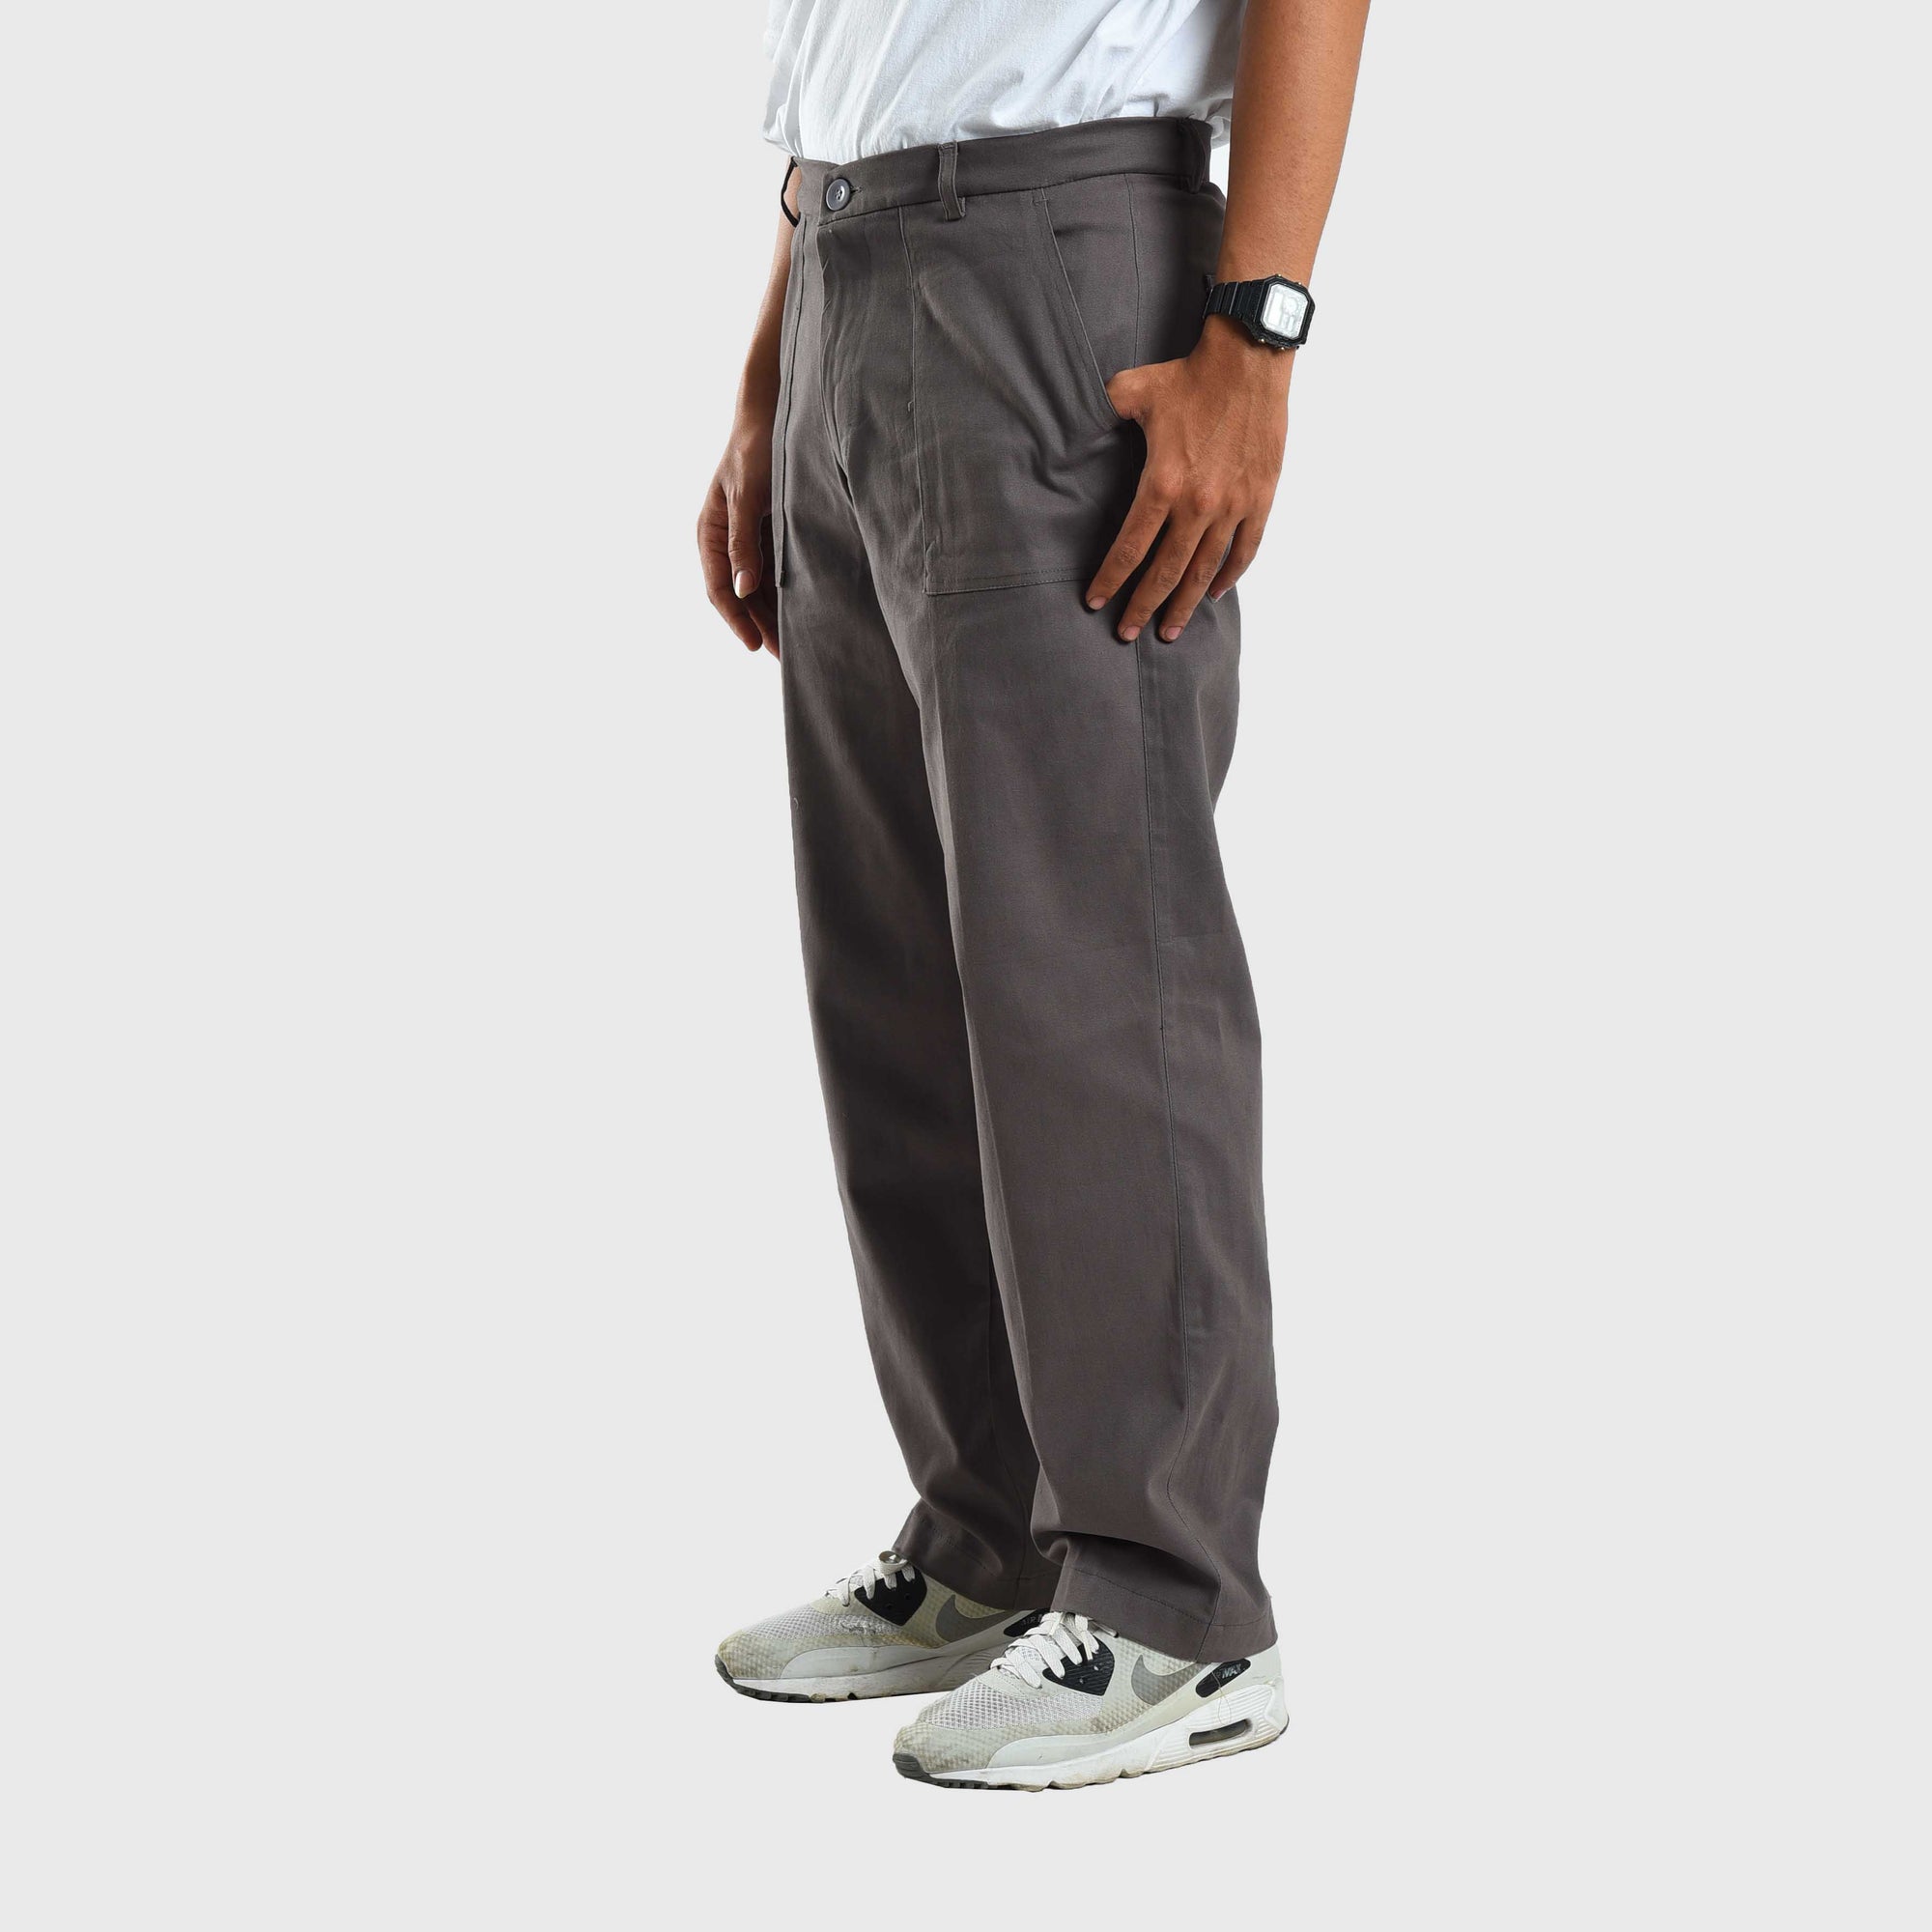 Roughneck C031 Grey Dennery Fatigue Pants